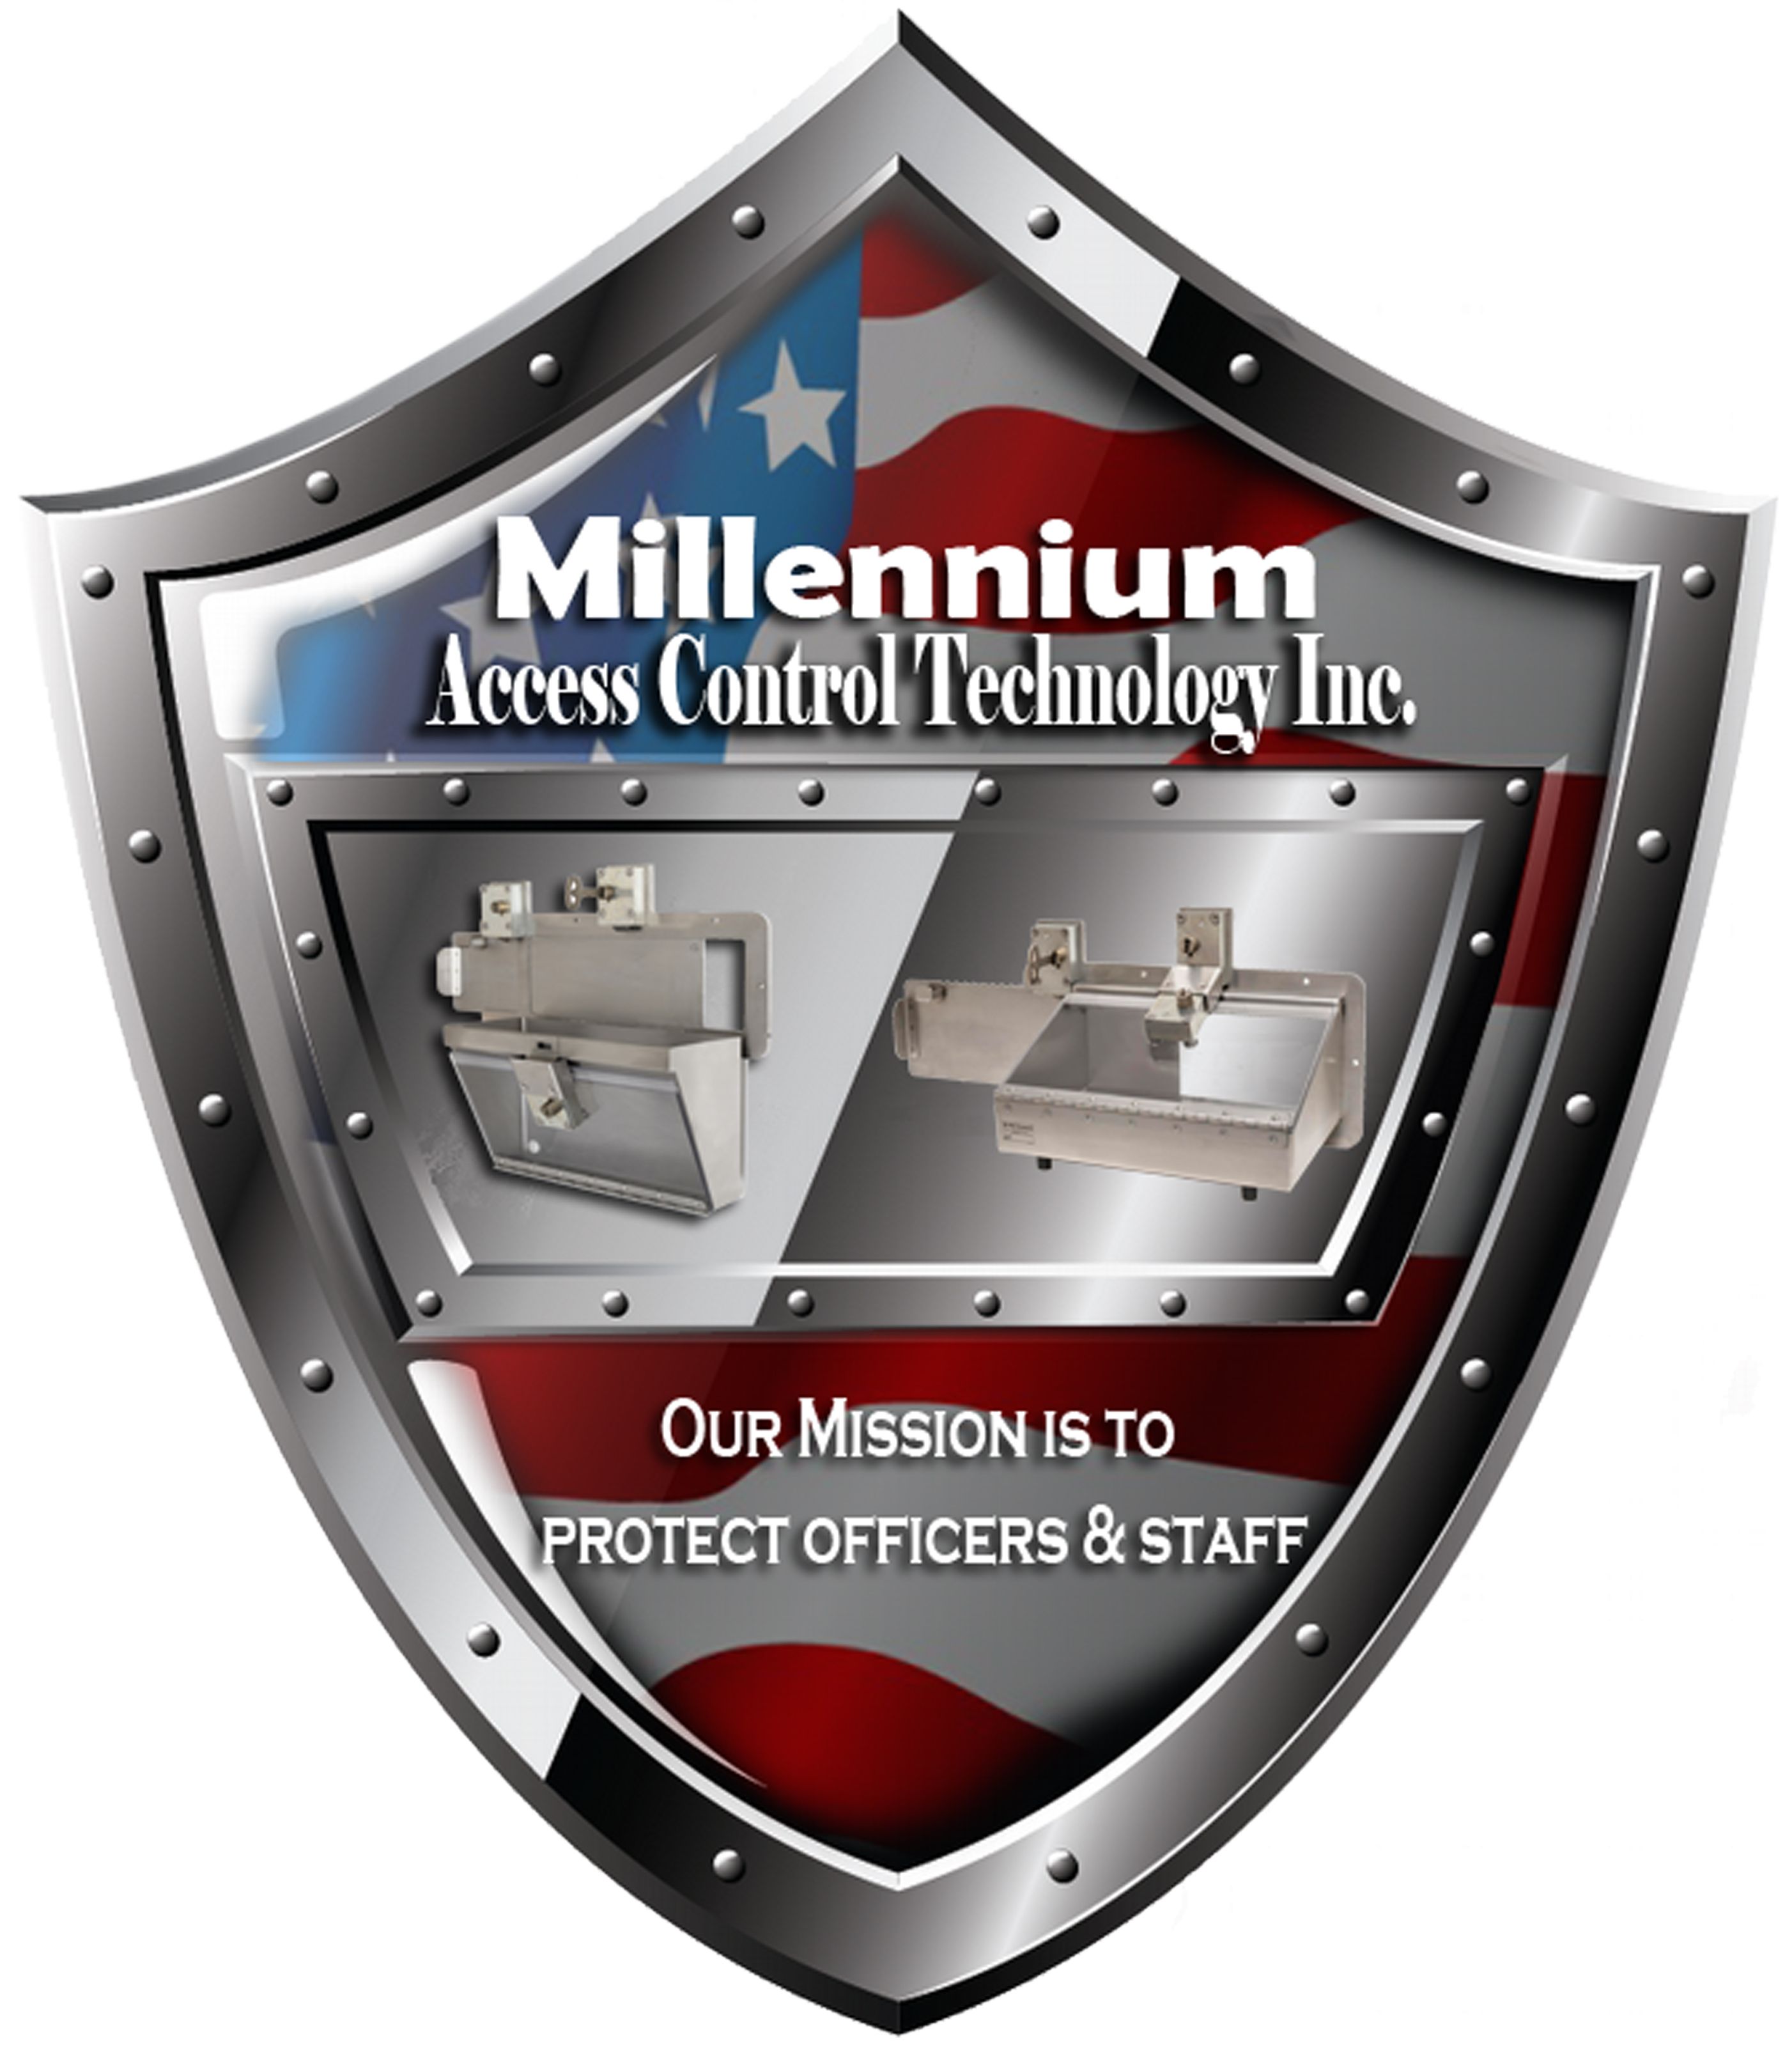 Millennium Access Control Technology, Inc.